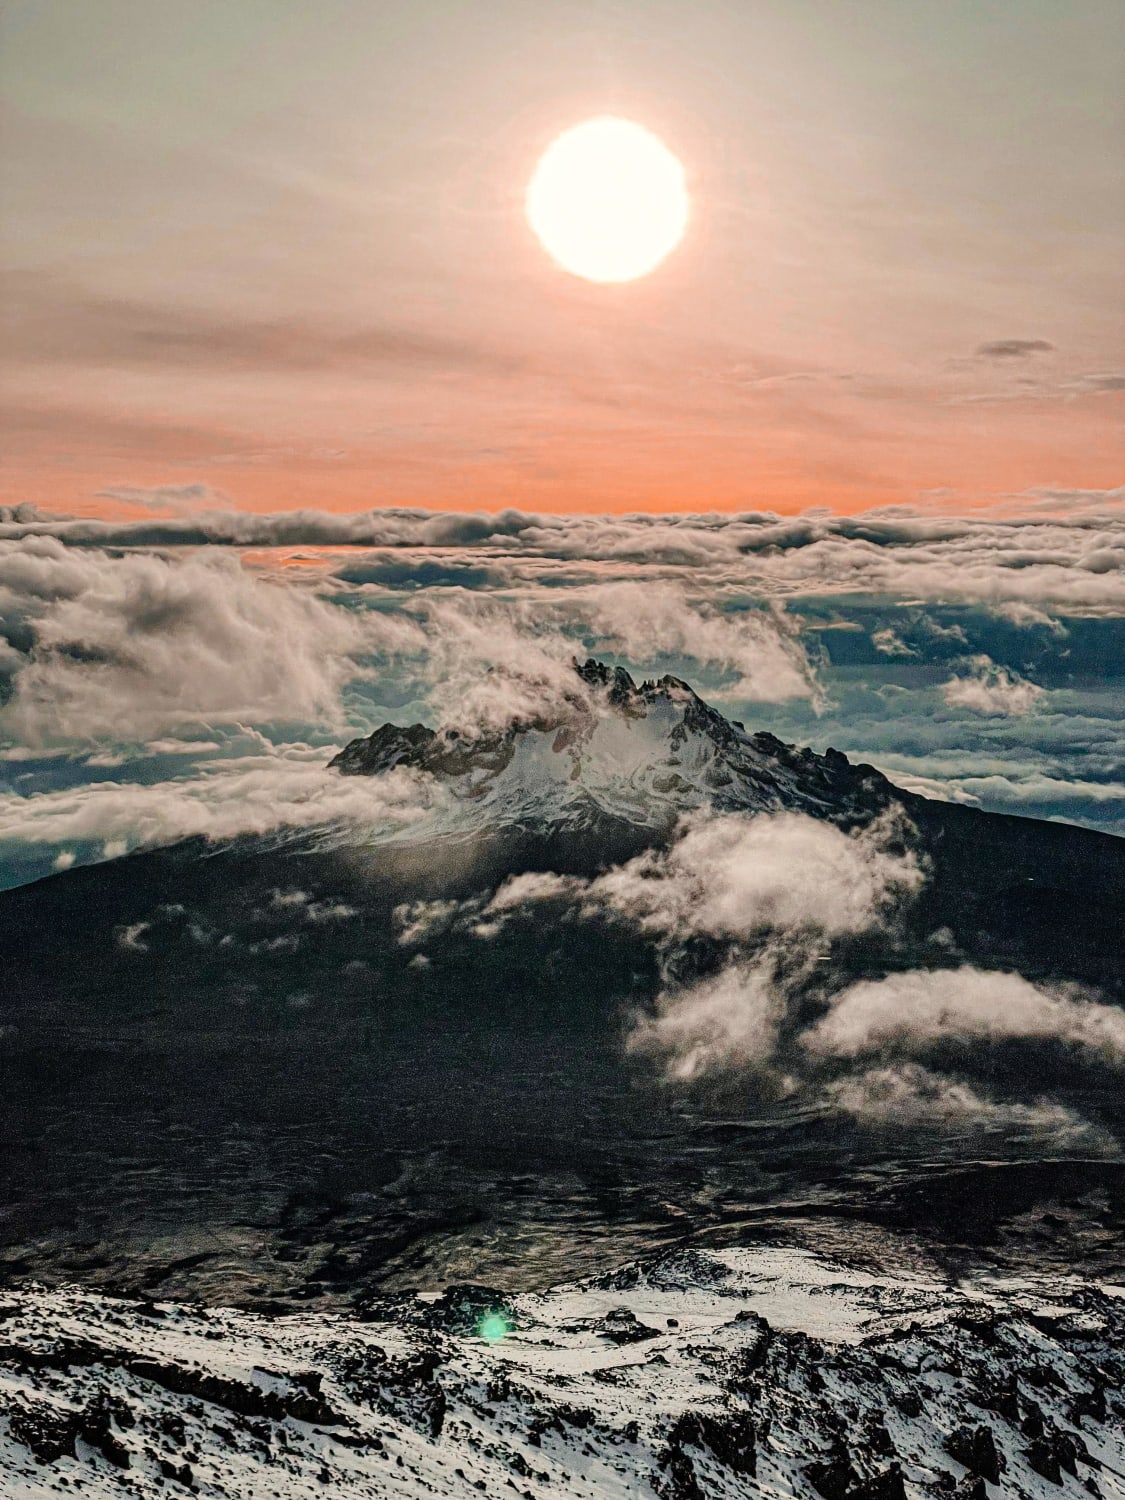 Sunrise at Kilimanjaro - view from Kibu peak on Mawenzi peak 22/02/2022